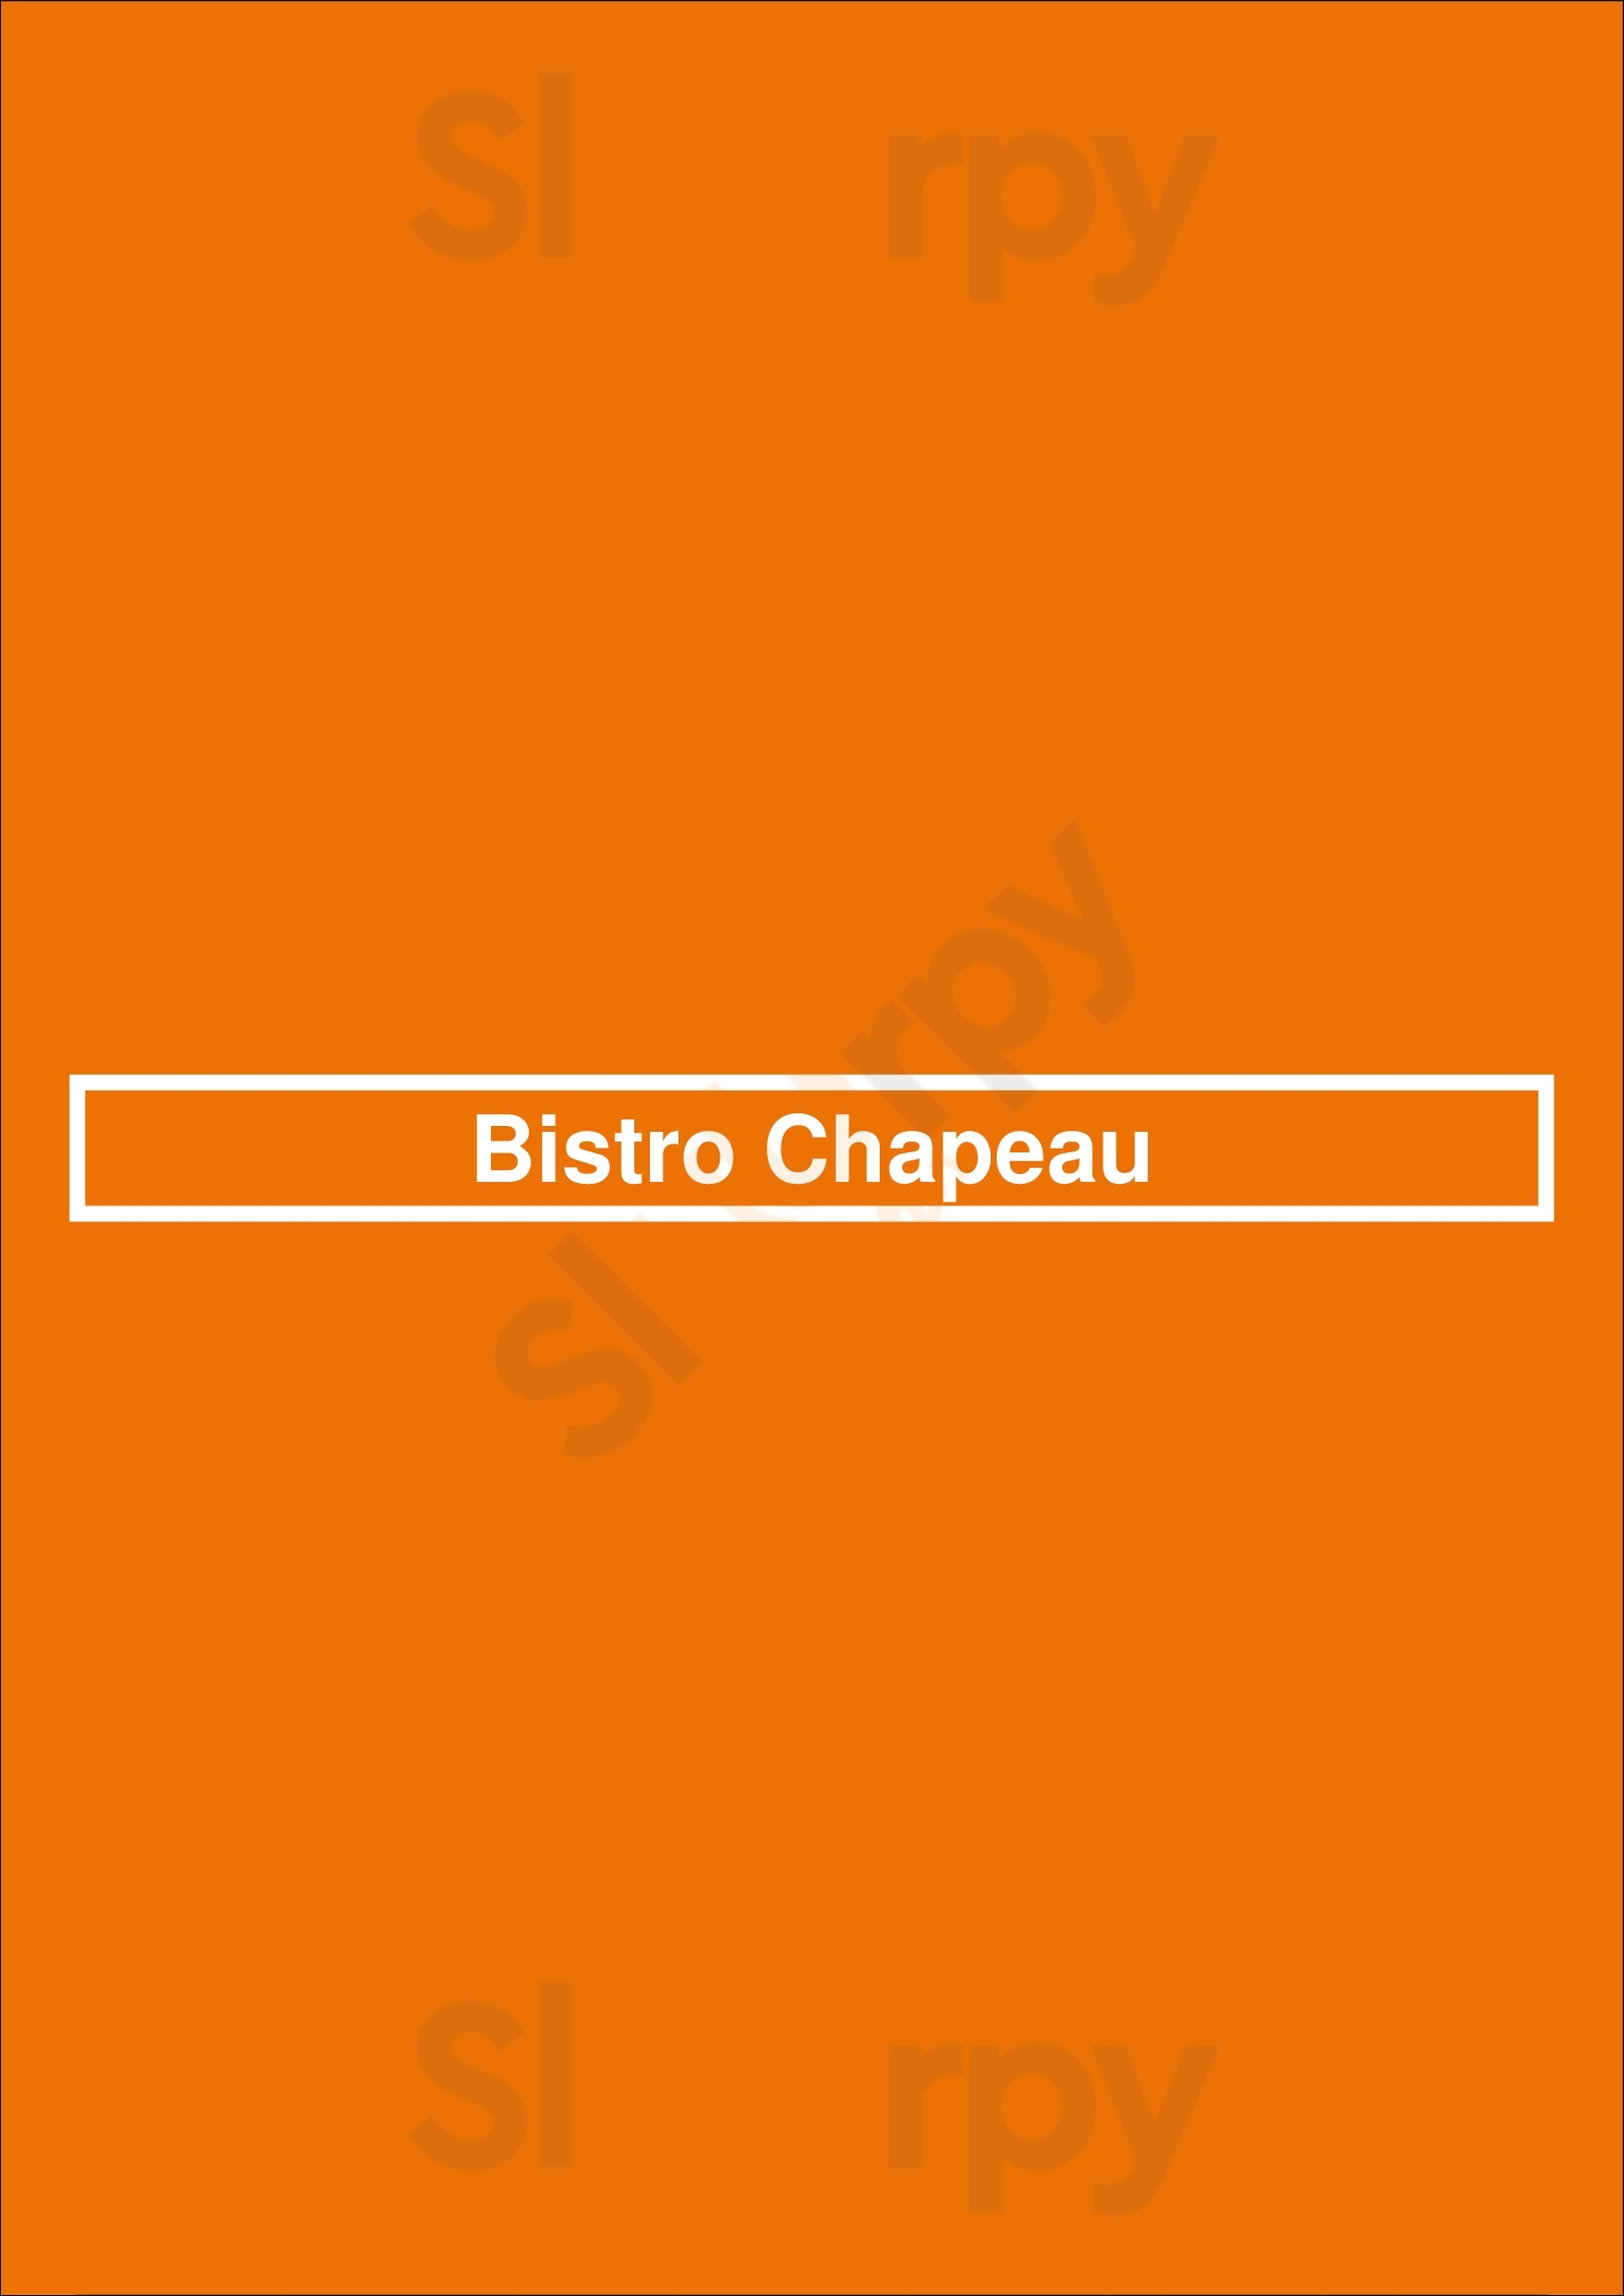 Bistro Chapeau Blaricum Menu - 1